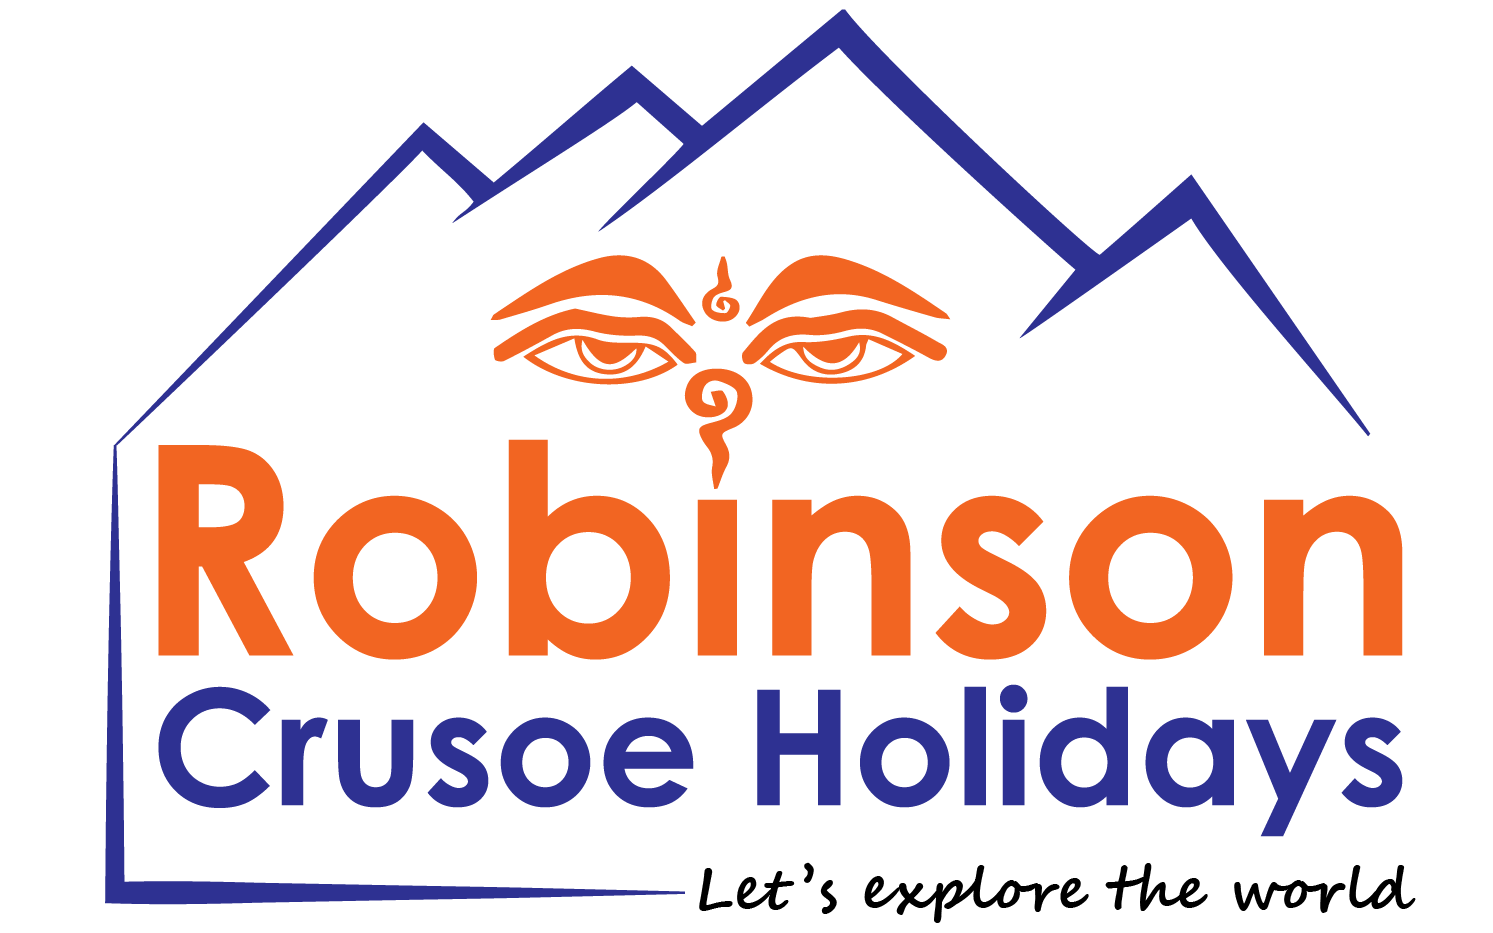 ROBINSON CRUSOE HOLIDAYS